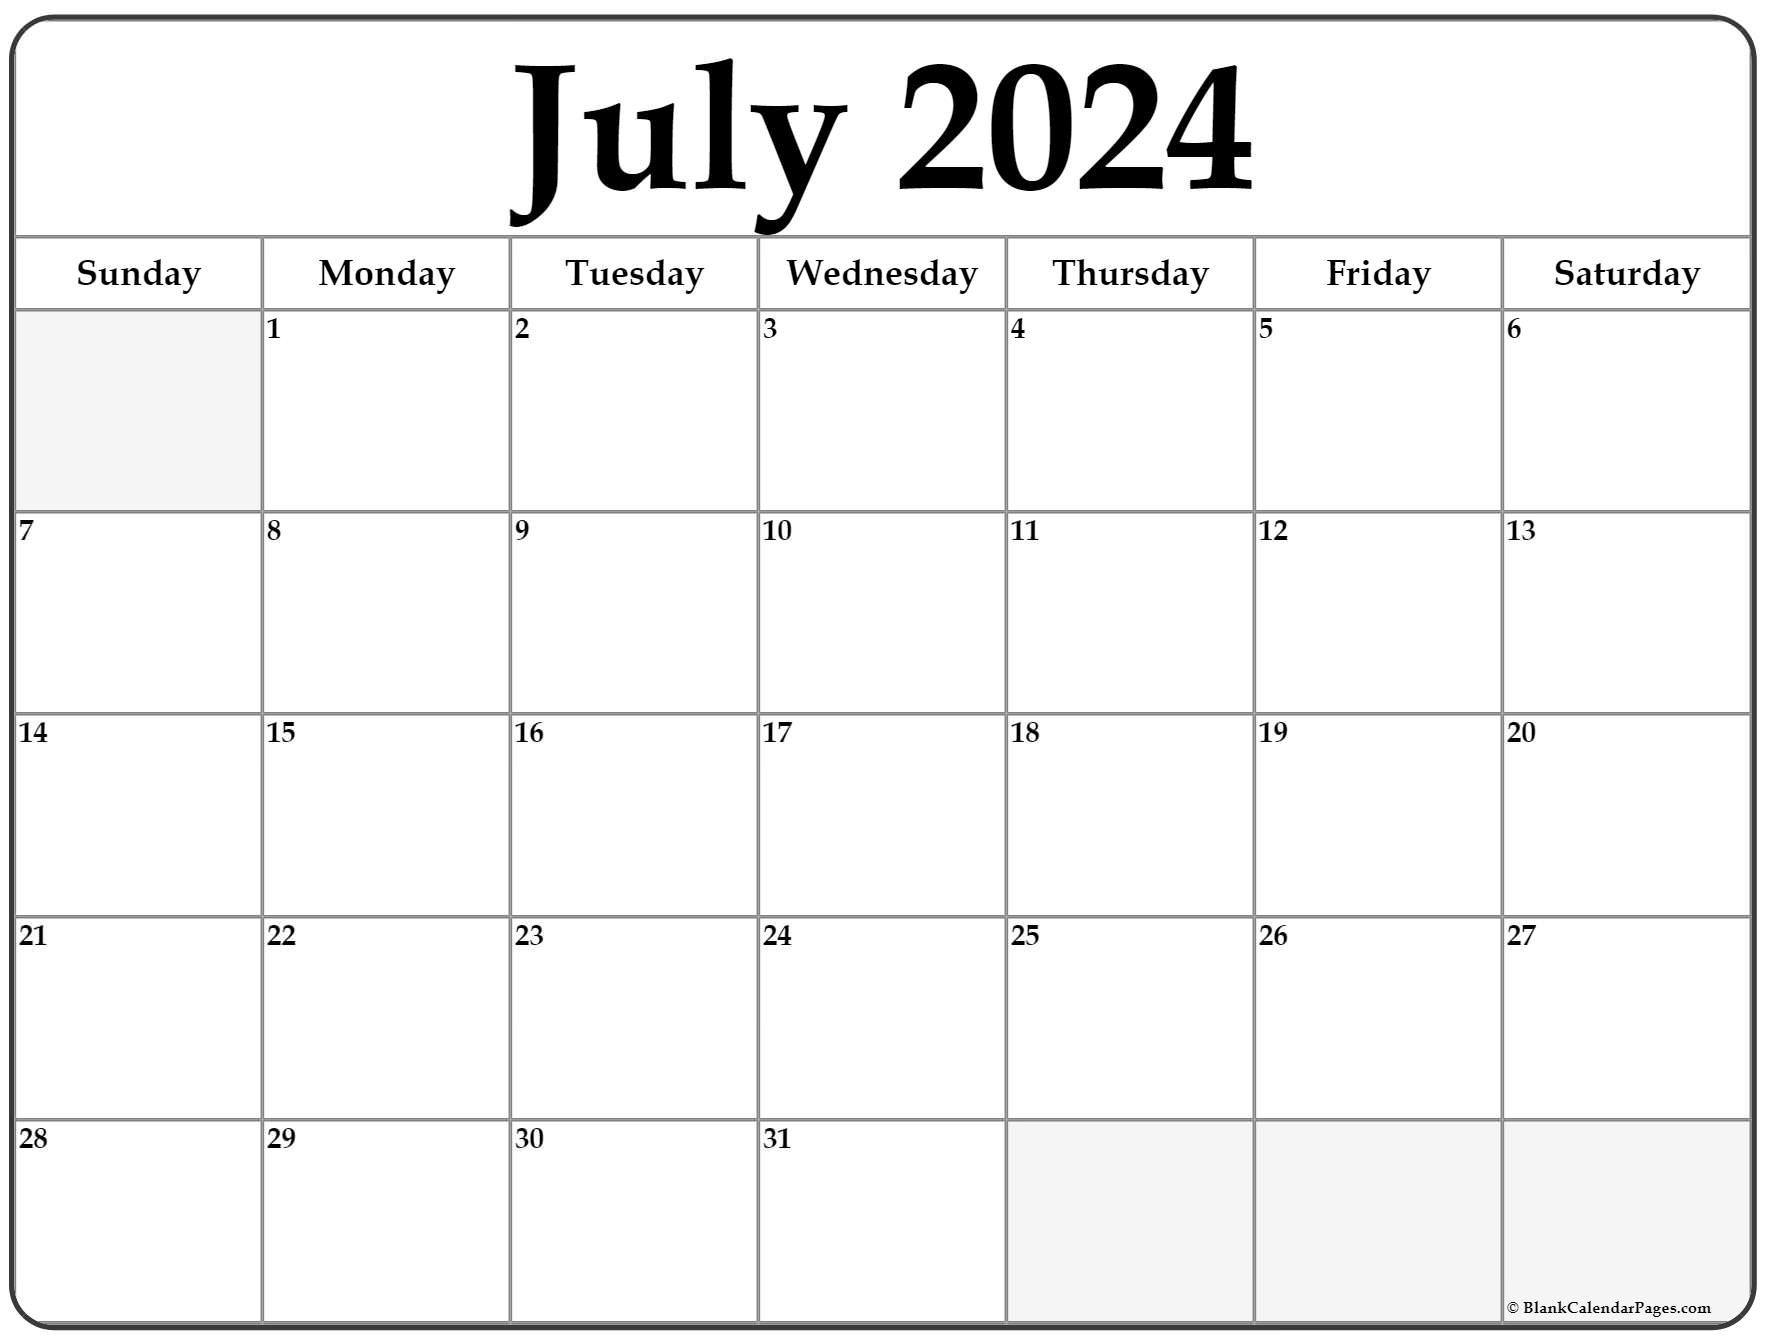 How Many Days Since July 21 2024 Talia Felicdad